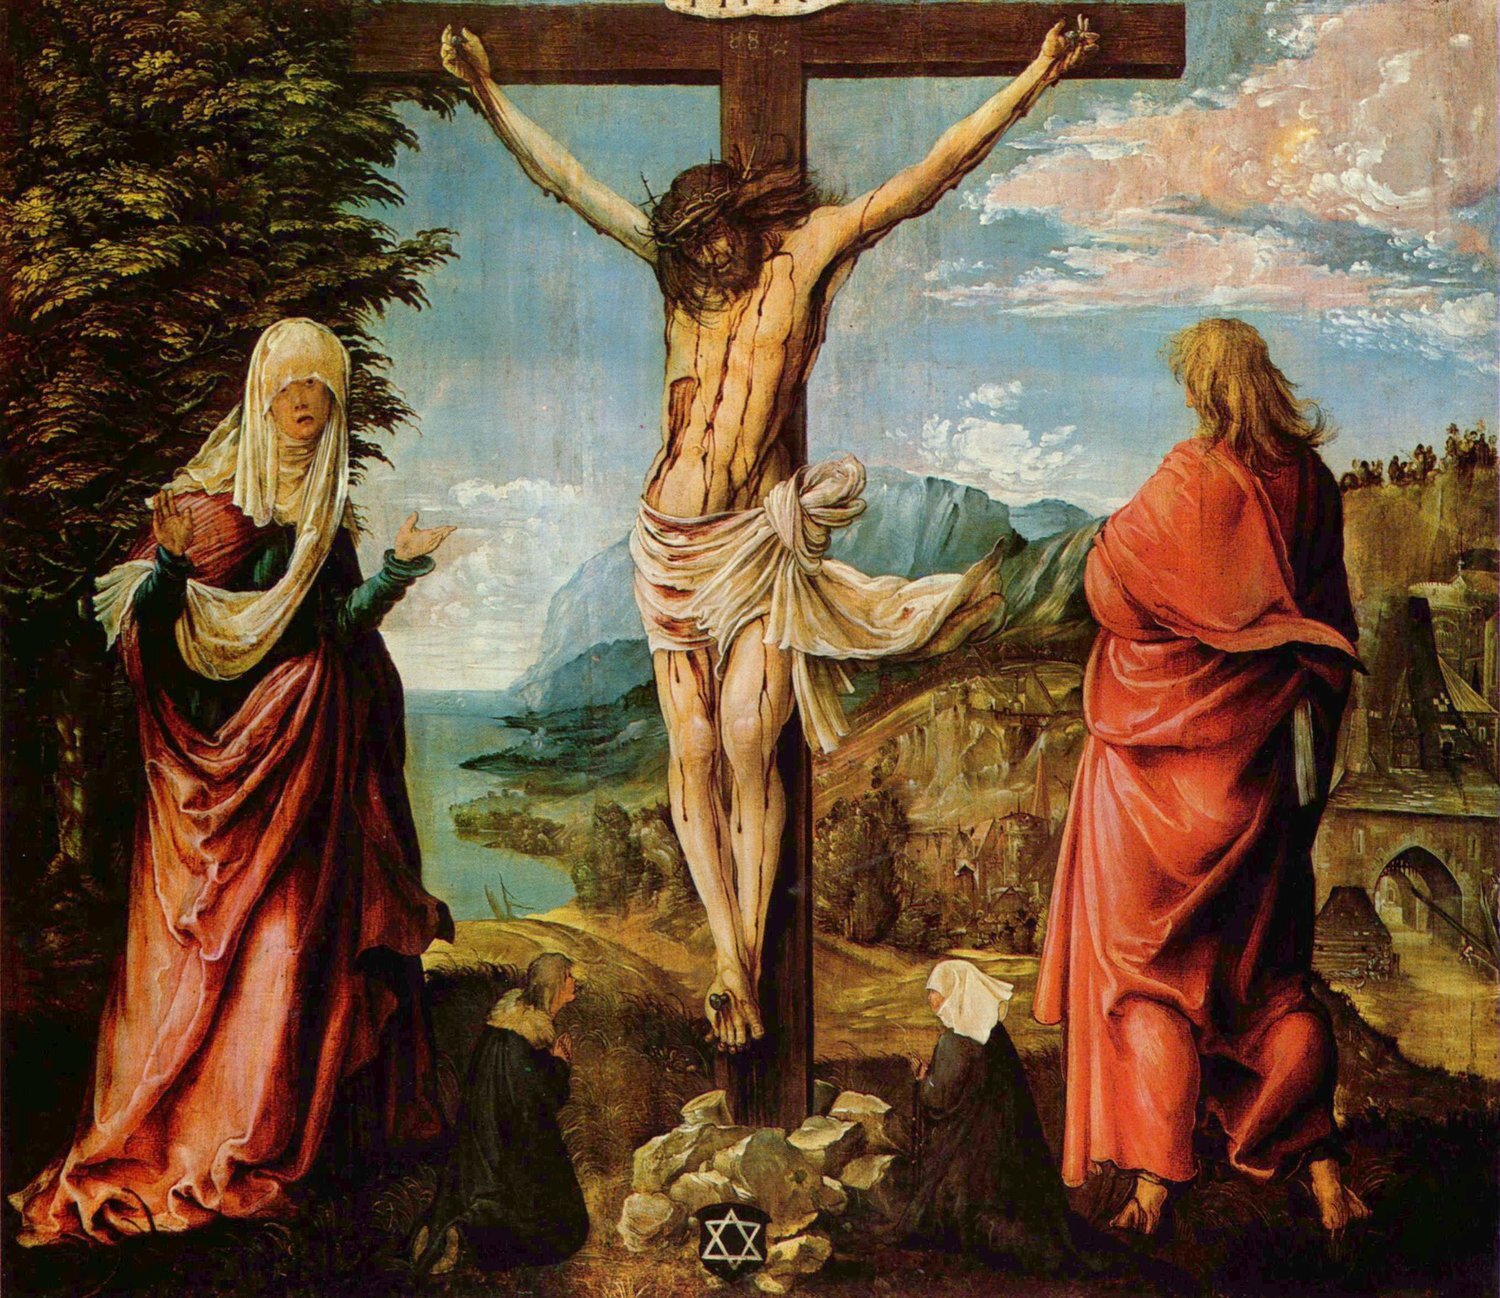 Christian Art in History 